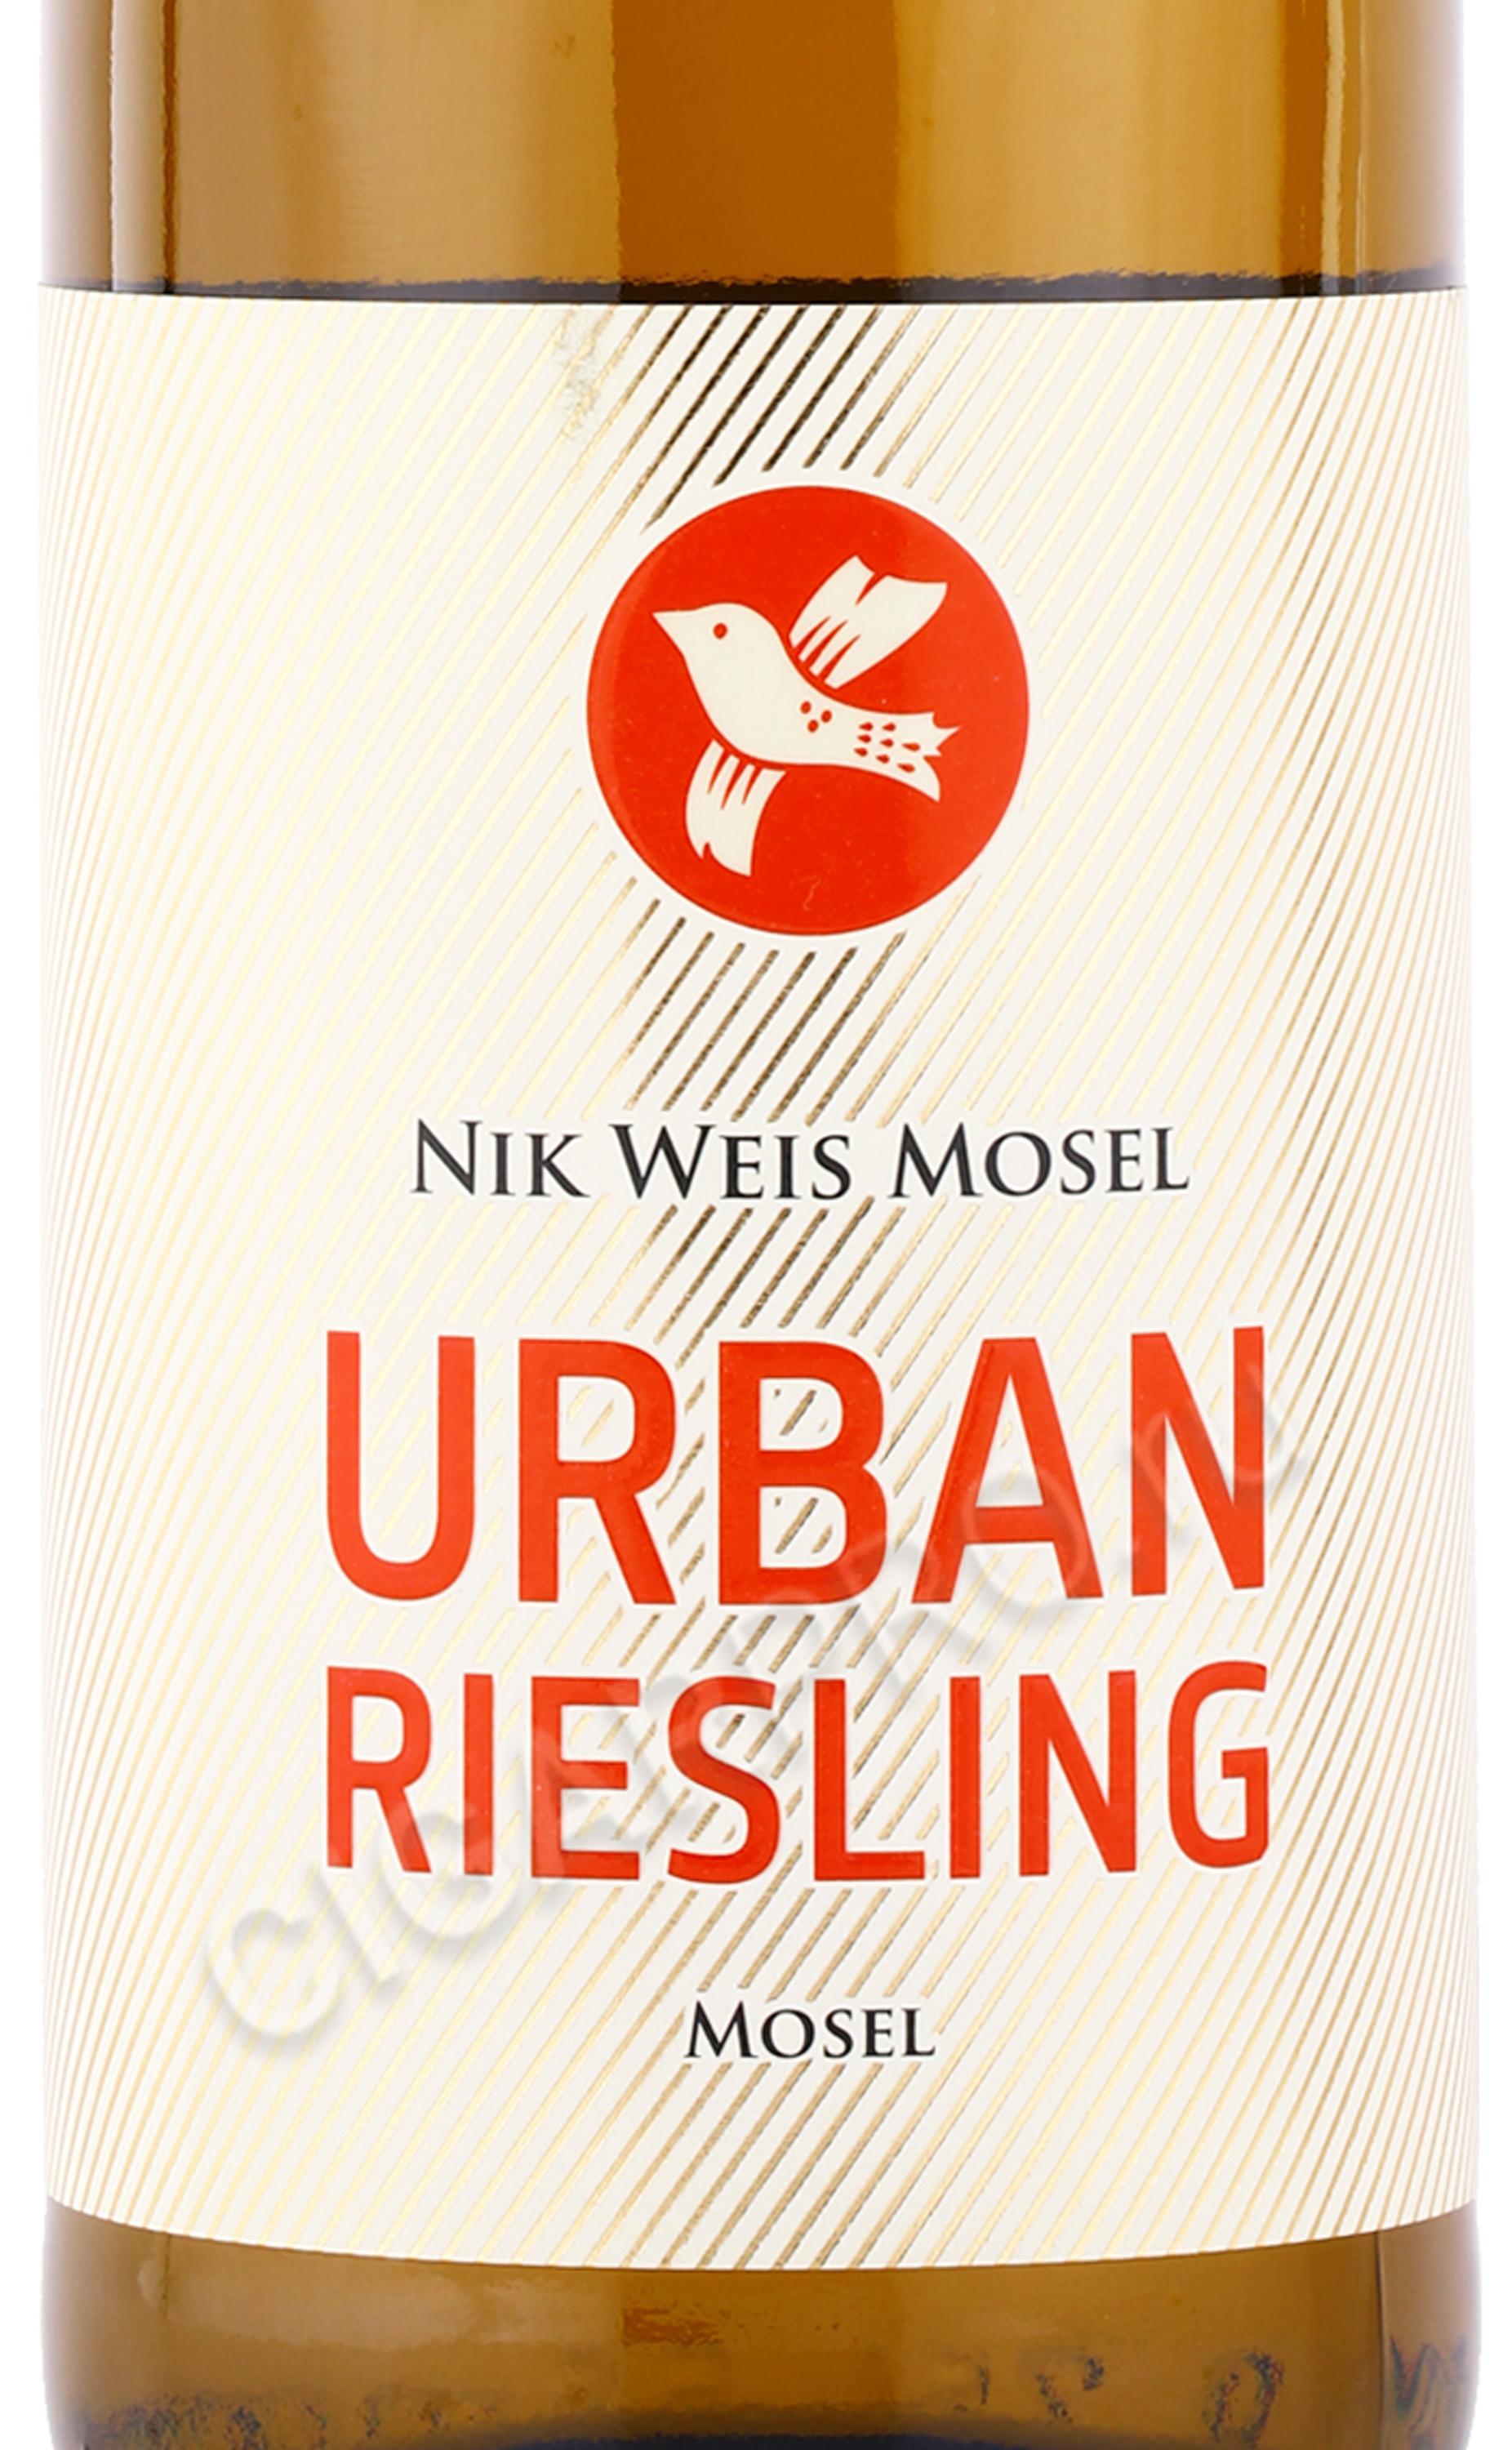 Nik weis. Урбан Рислинг вино. Nik Weis Urban Riesling. Вино Урбан Рислинг Мозель. Riesling Mosel вино.